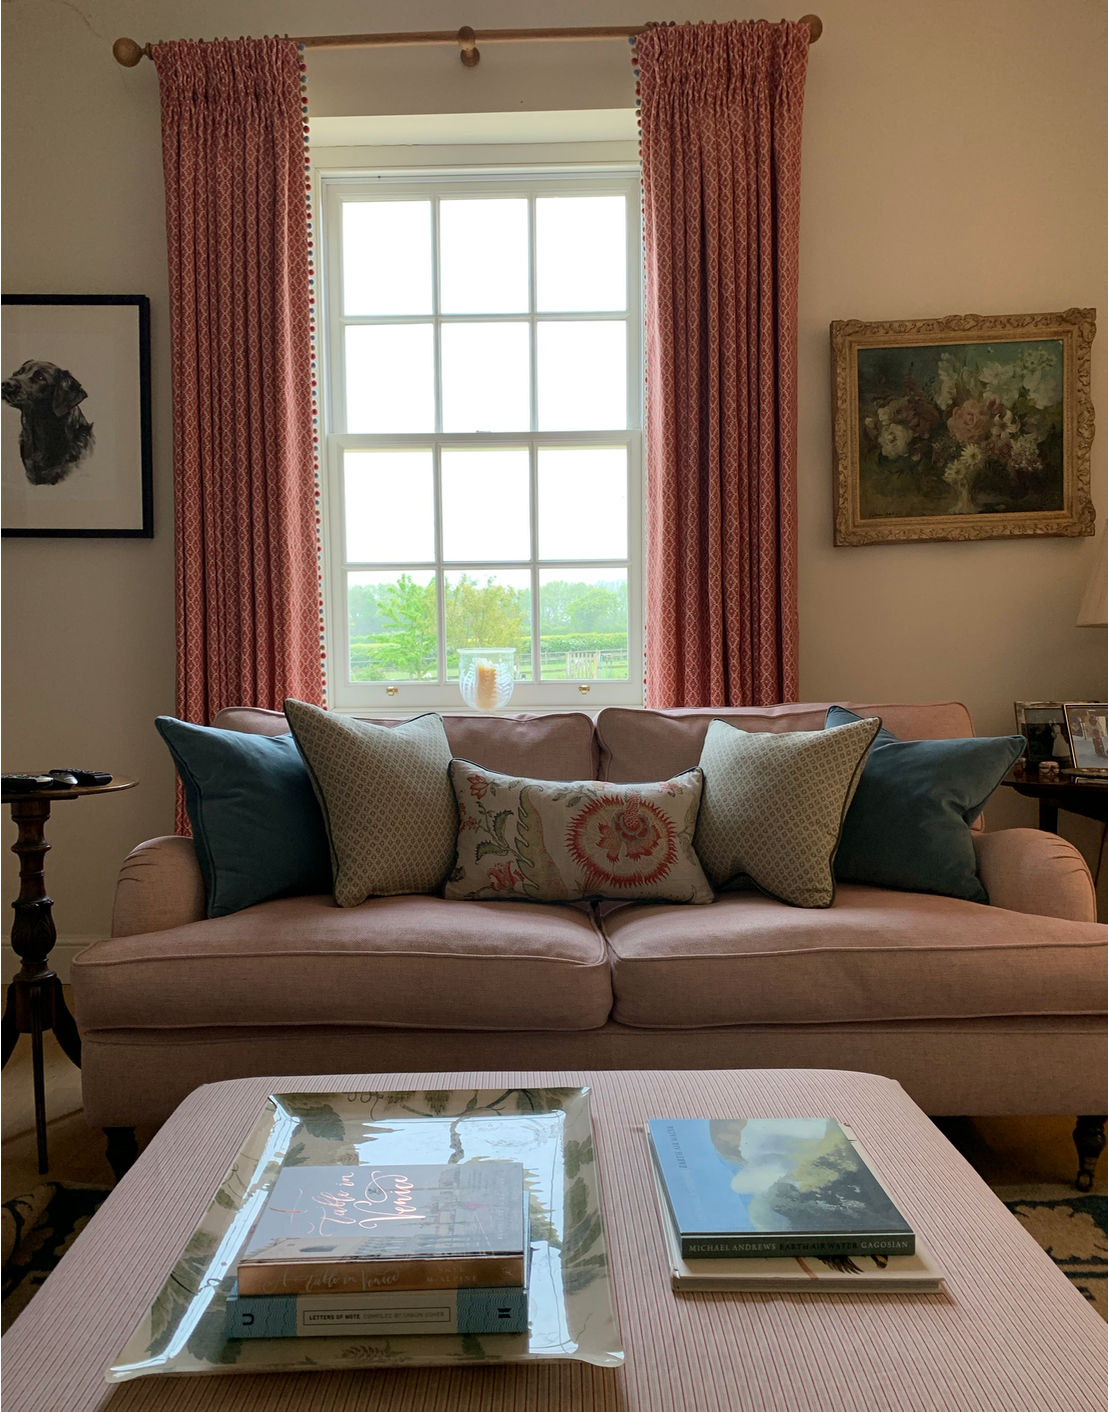 New sofa, cushions, curtains and an ottoman